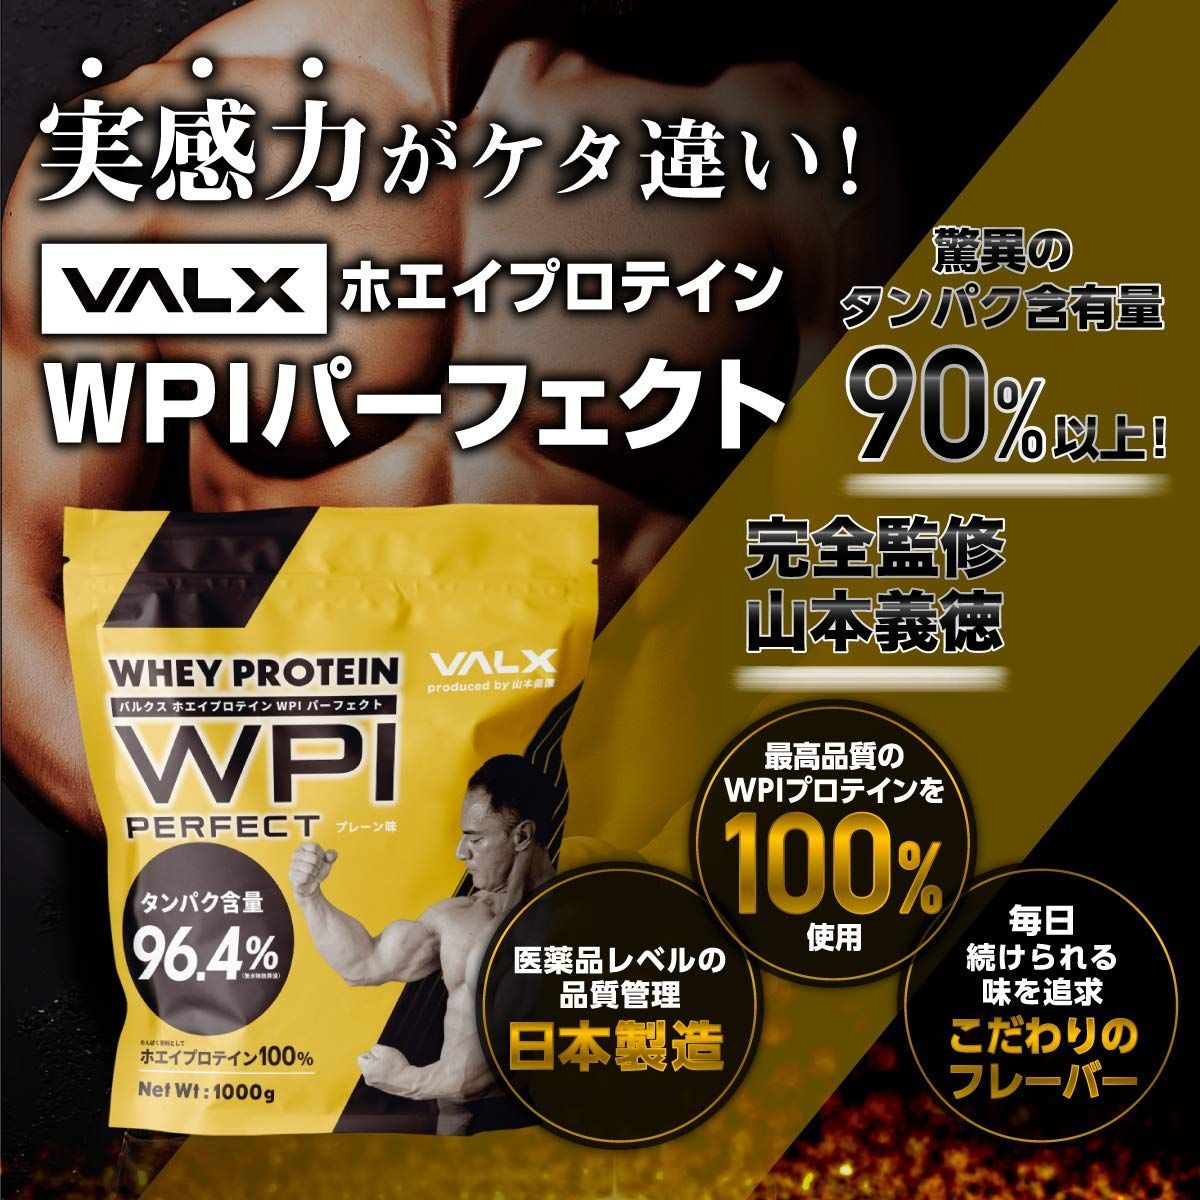 VALX ホエイプロテイン チョコレート風味 Produced by 山本義徳… - その他